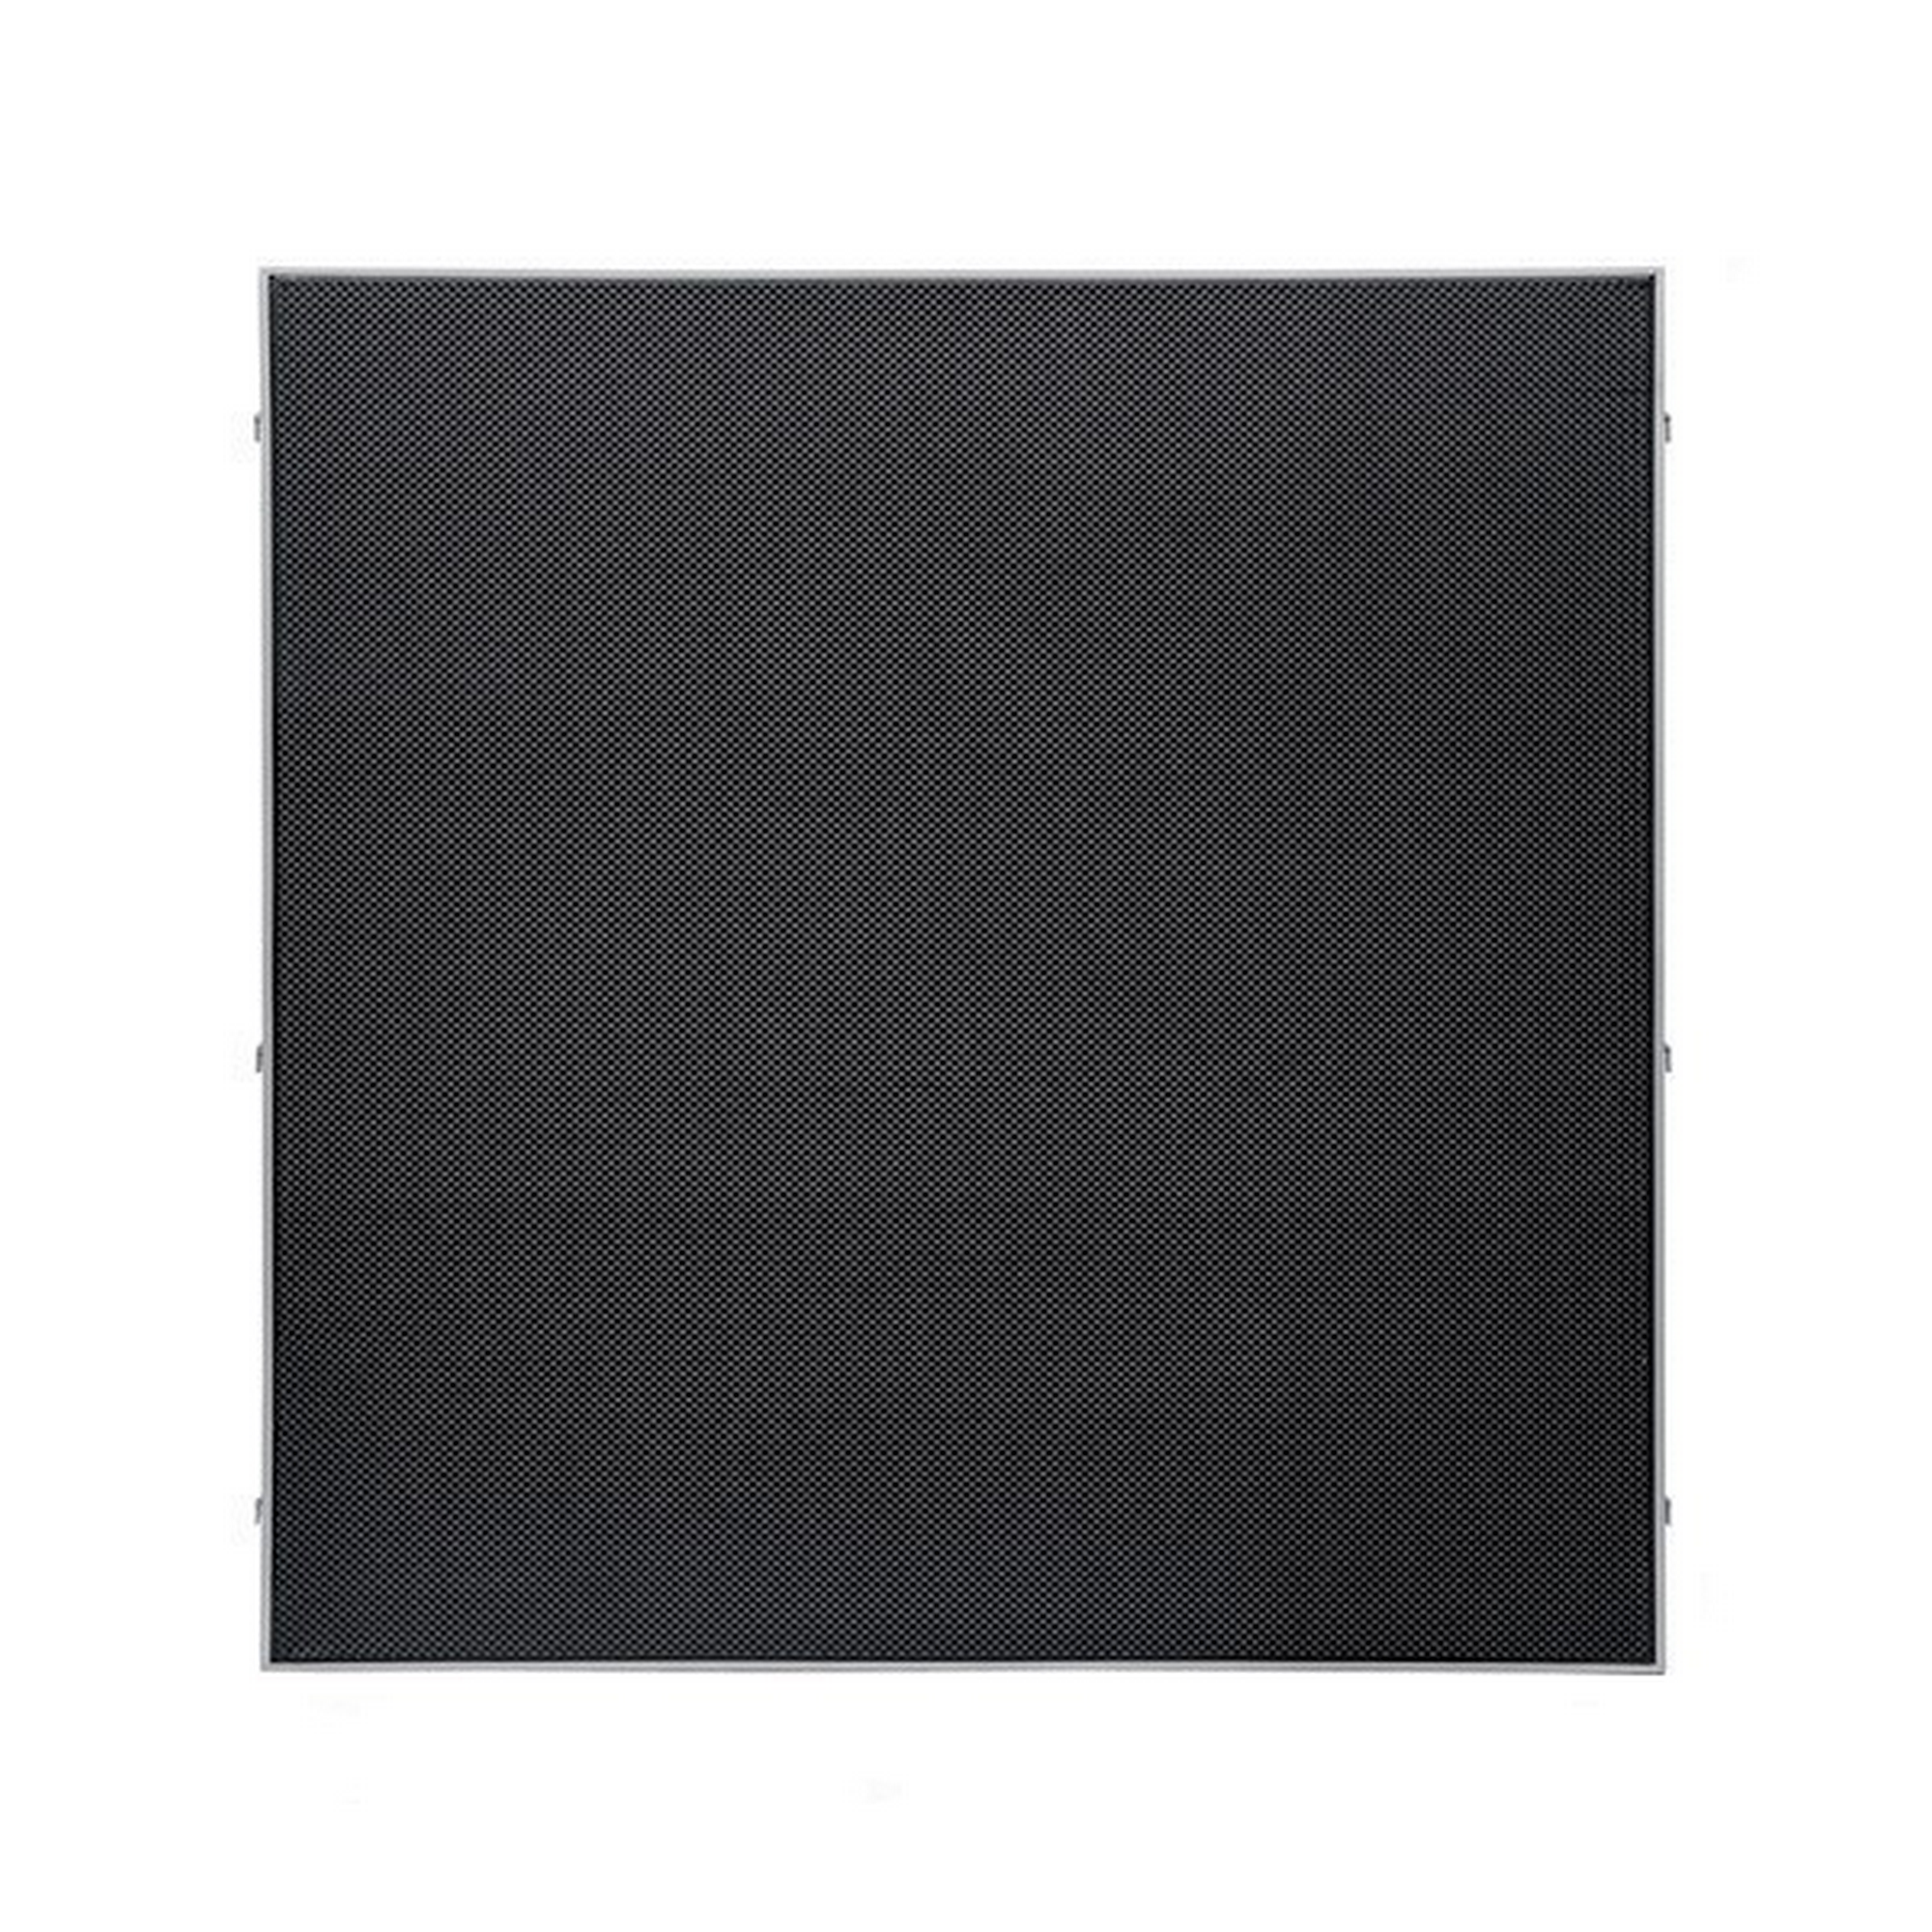 Sichtschutzelement 'Weave Lüx' Textil schwarz 178 x 178 cm + product picture